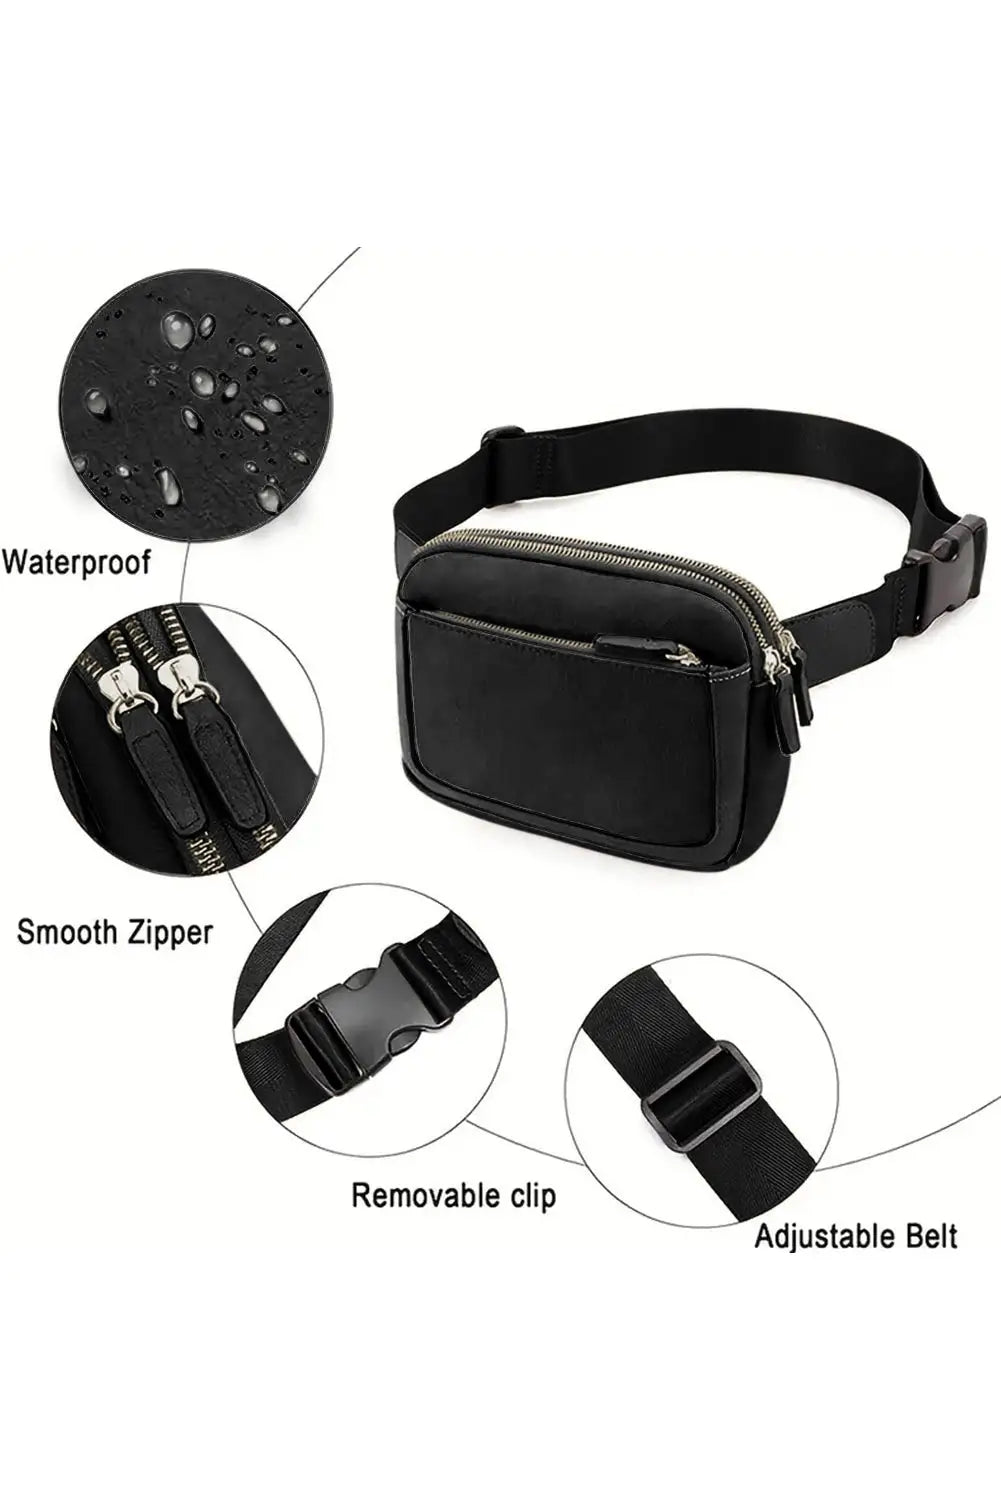 Black minimalist multi-zipped crossbody bag - shoes & bags